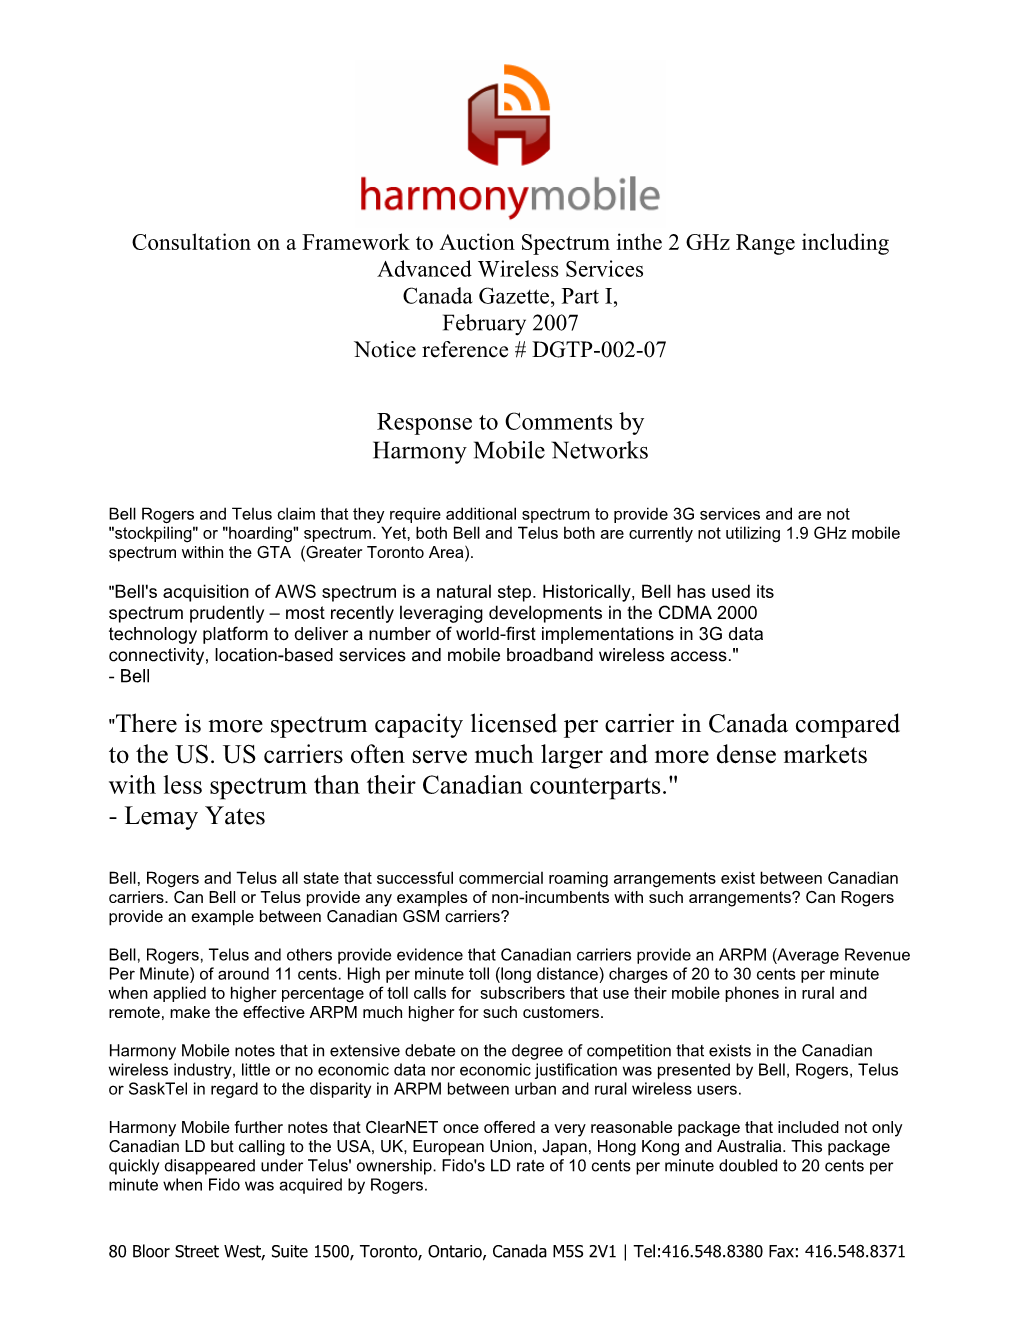 Harmony Mobile Networks